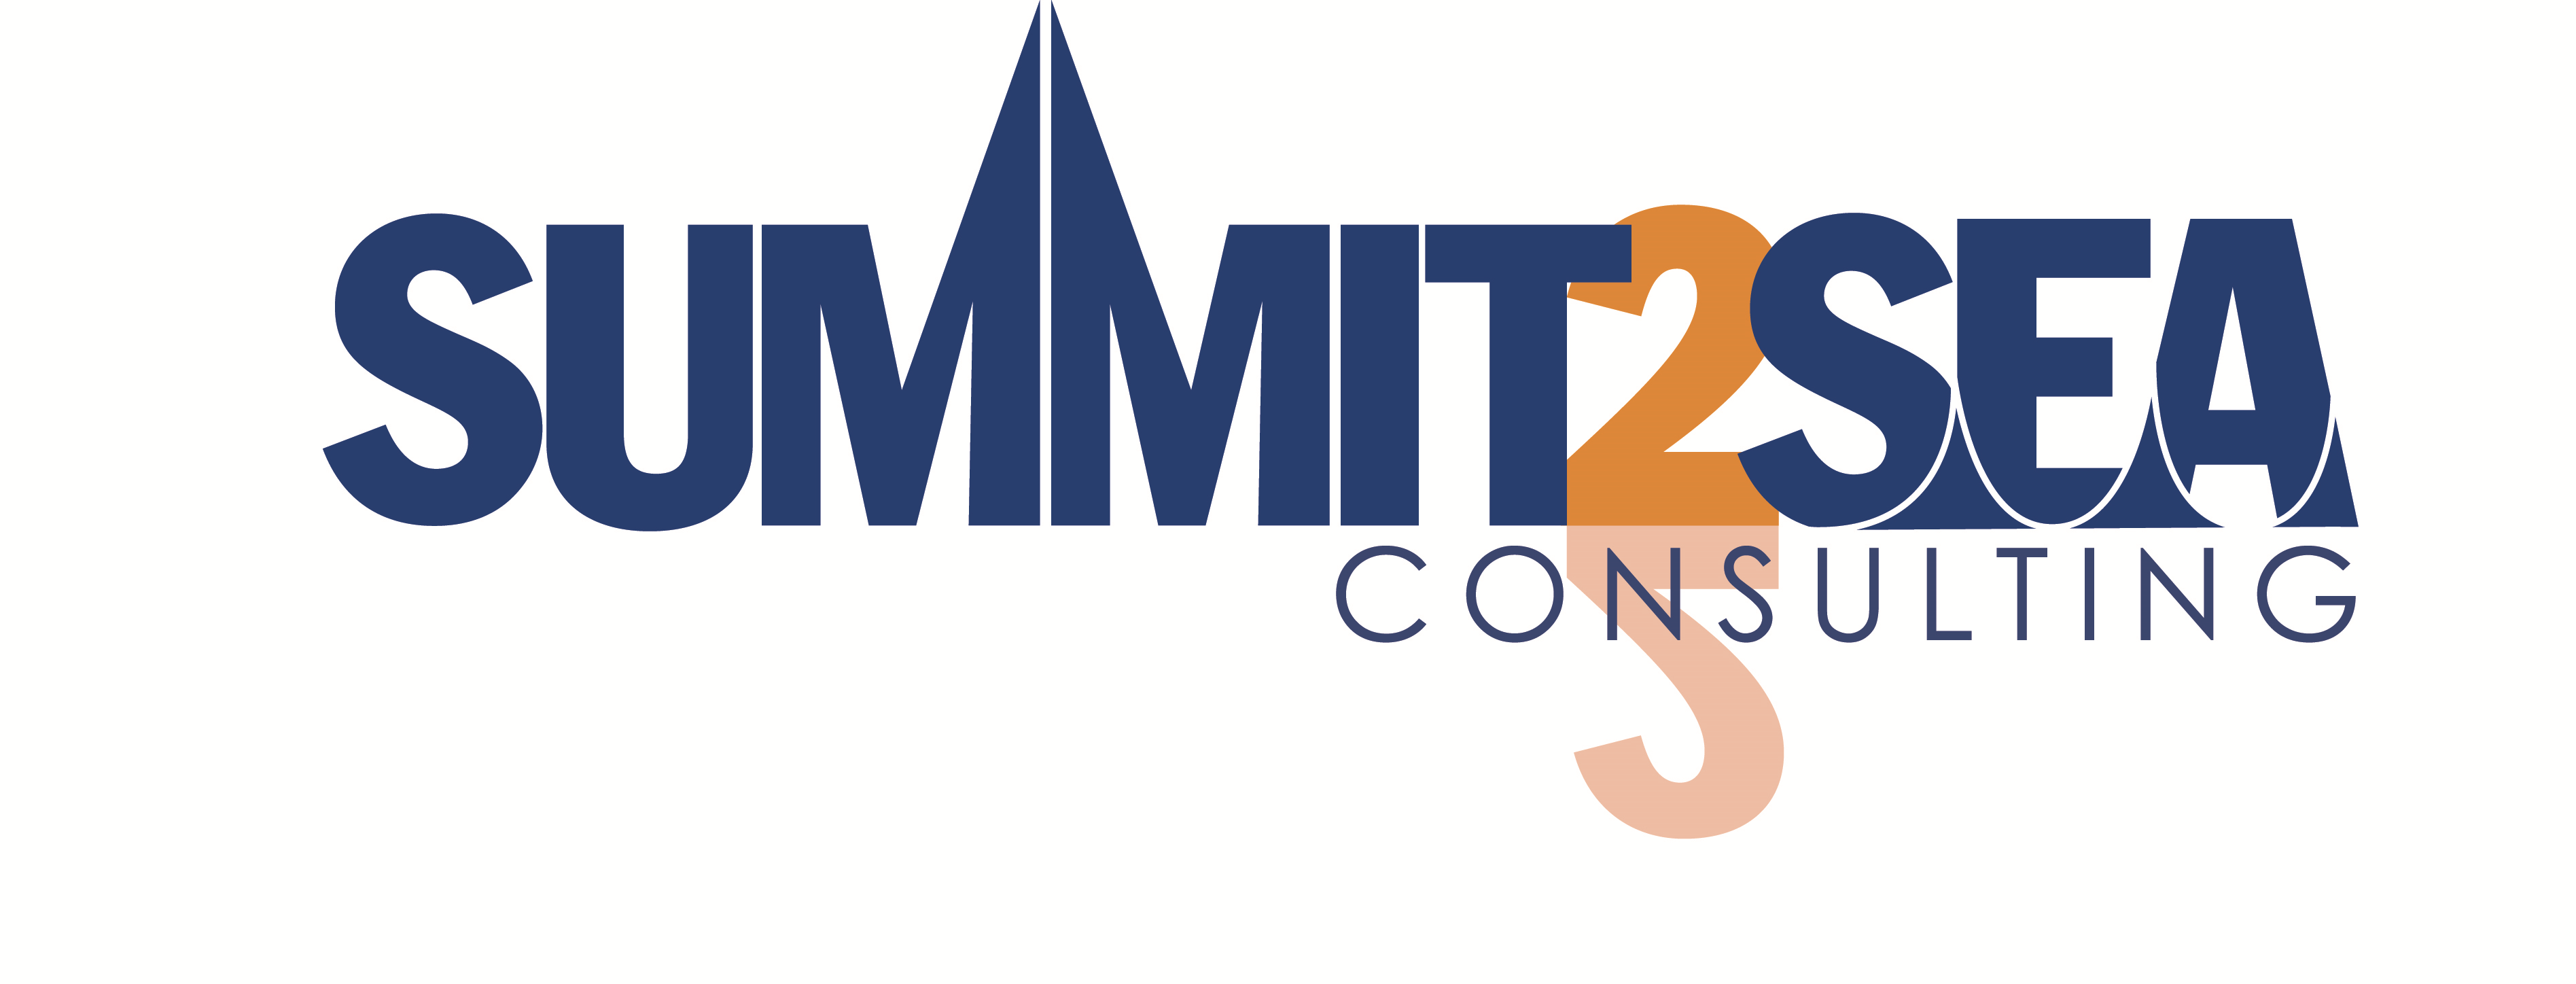 Summit2Sea Consulting, LLC logo